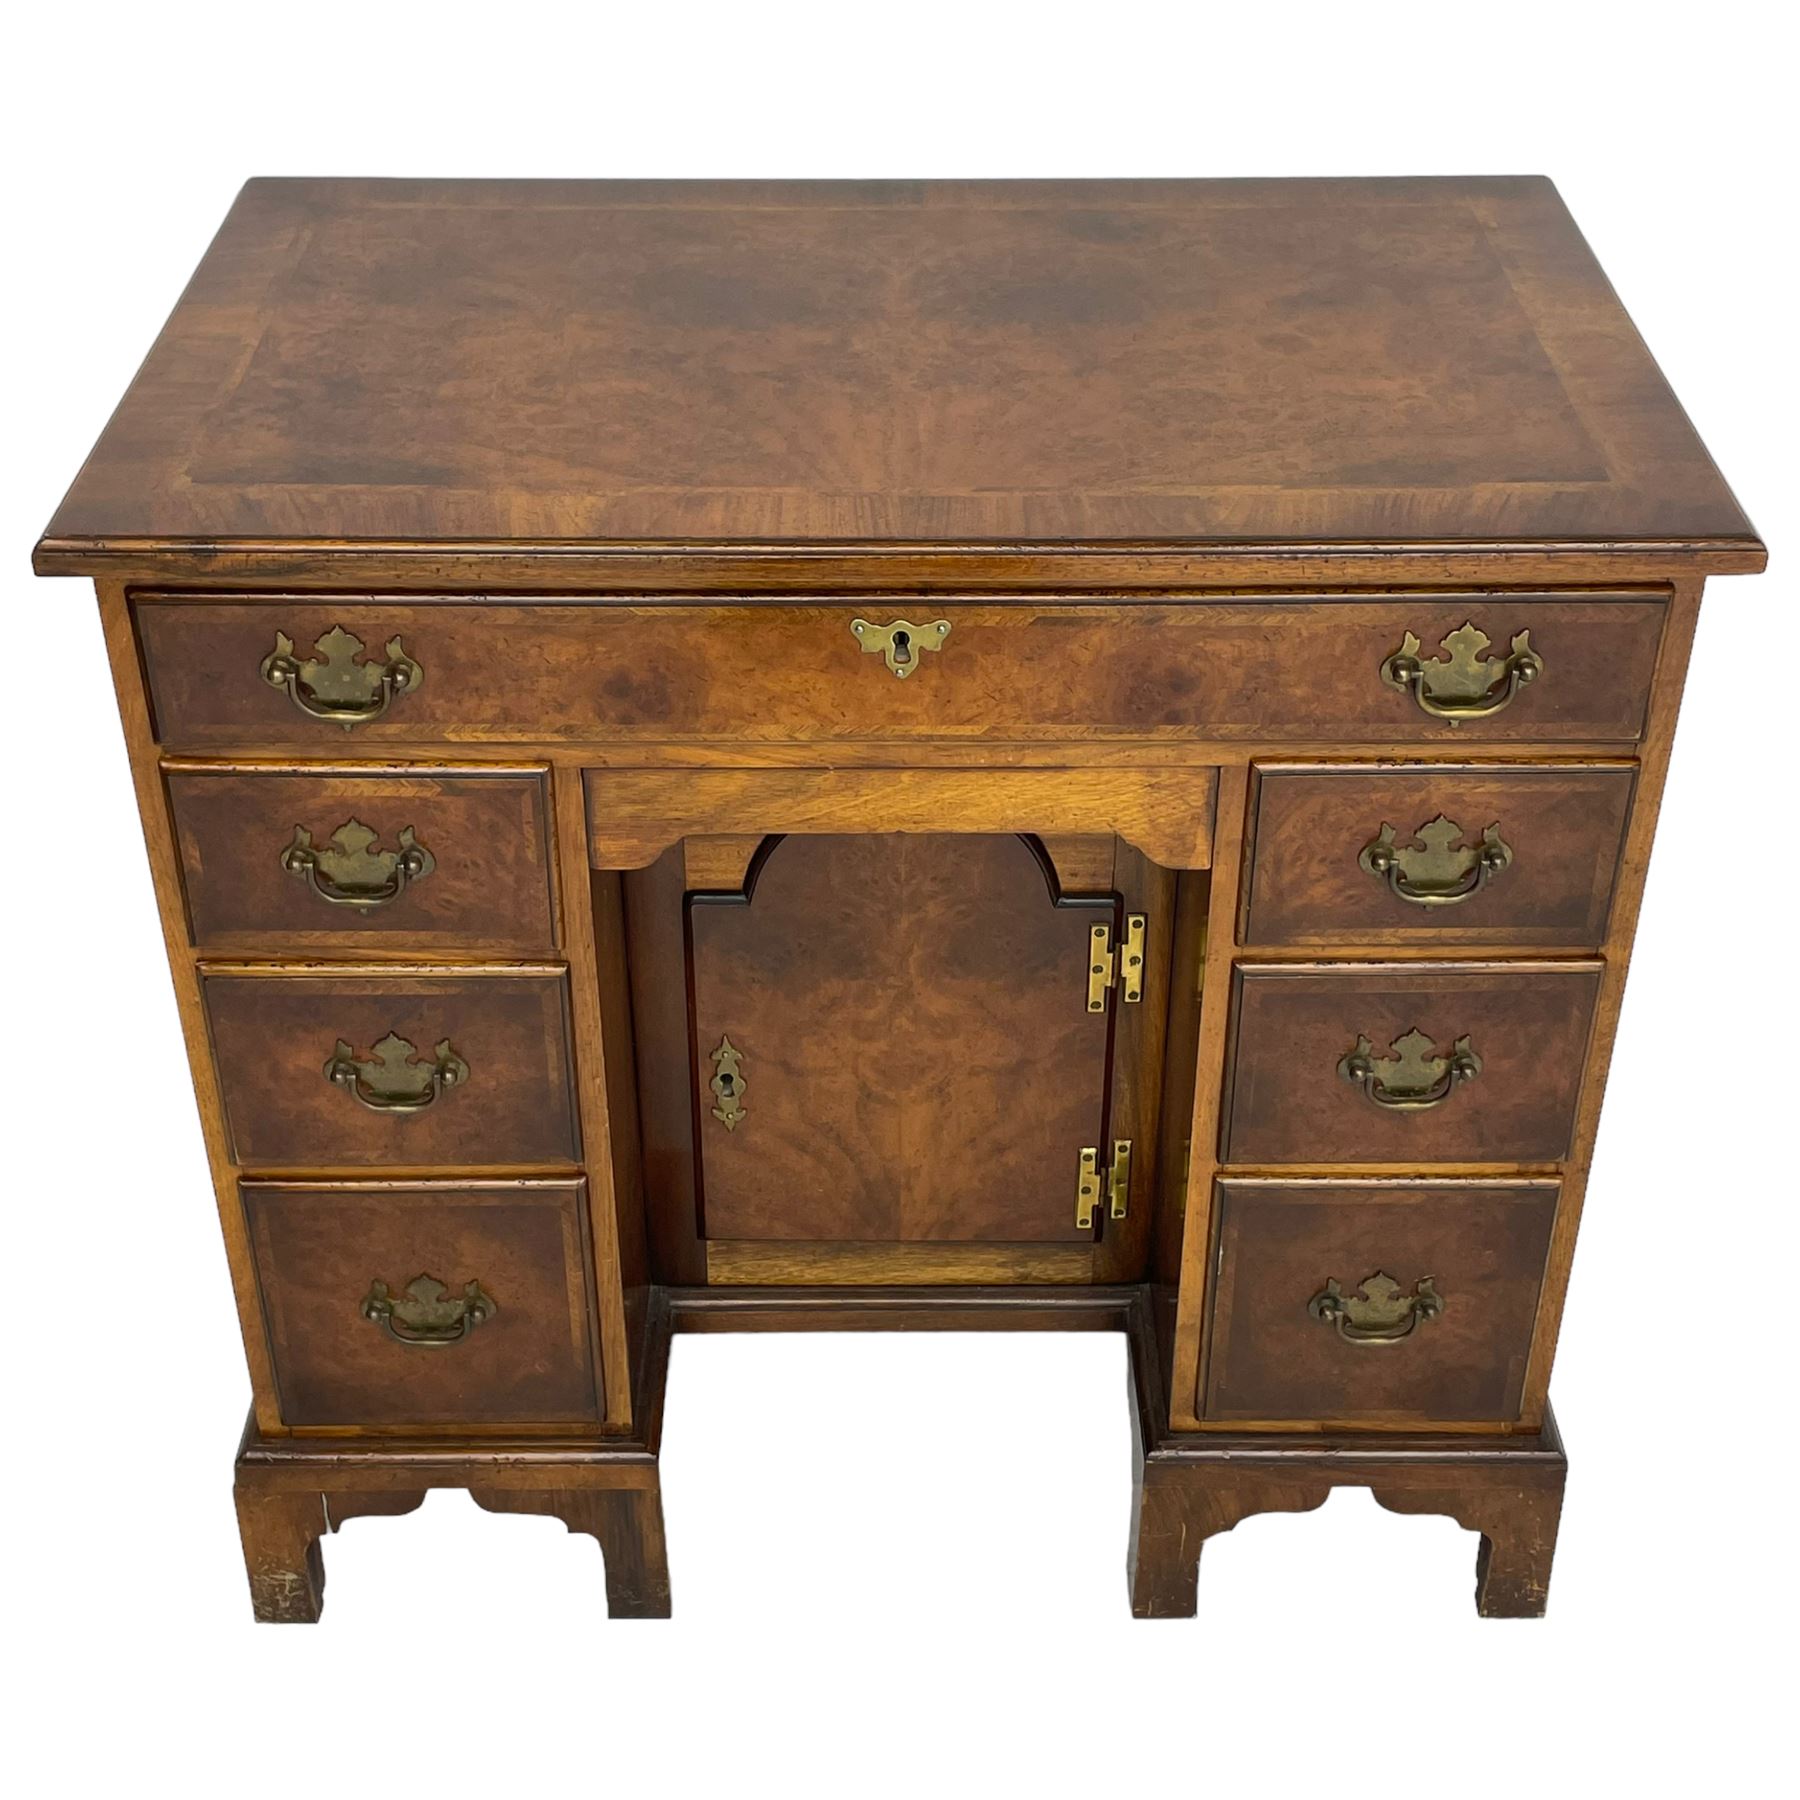 Georgian design figured walnut knee-hole desk - Image 5 of 9